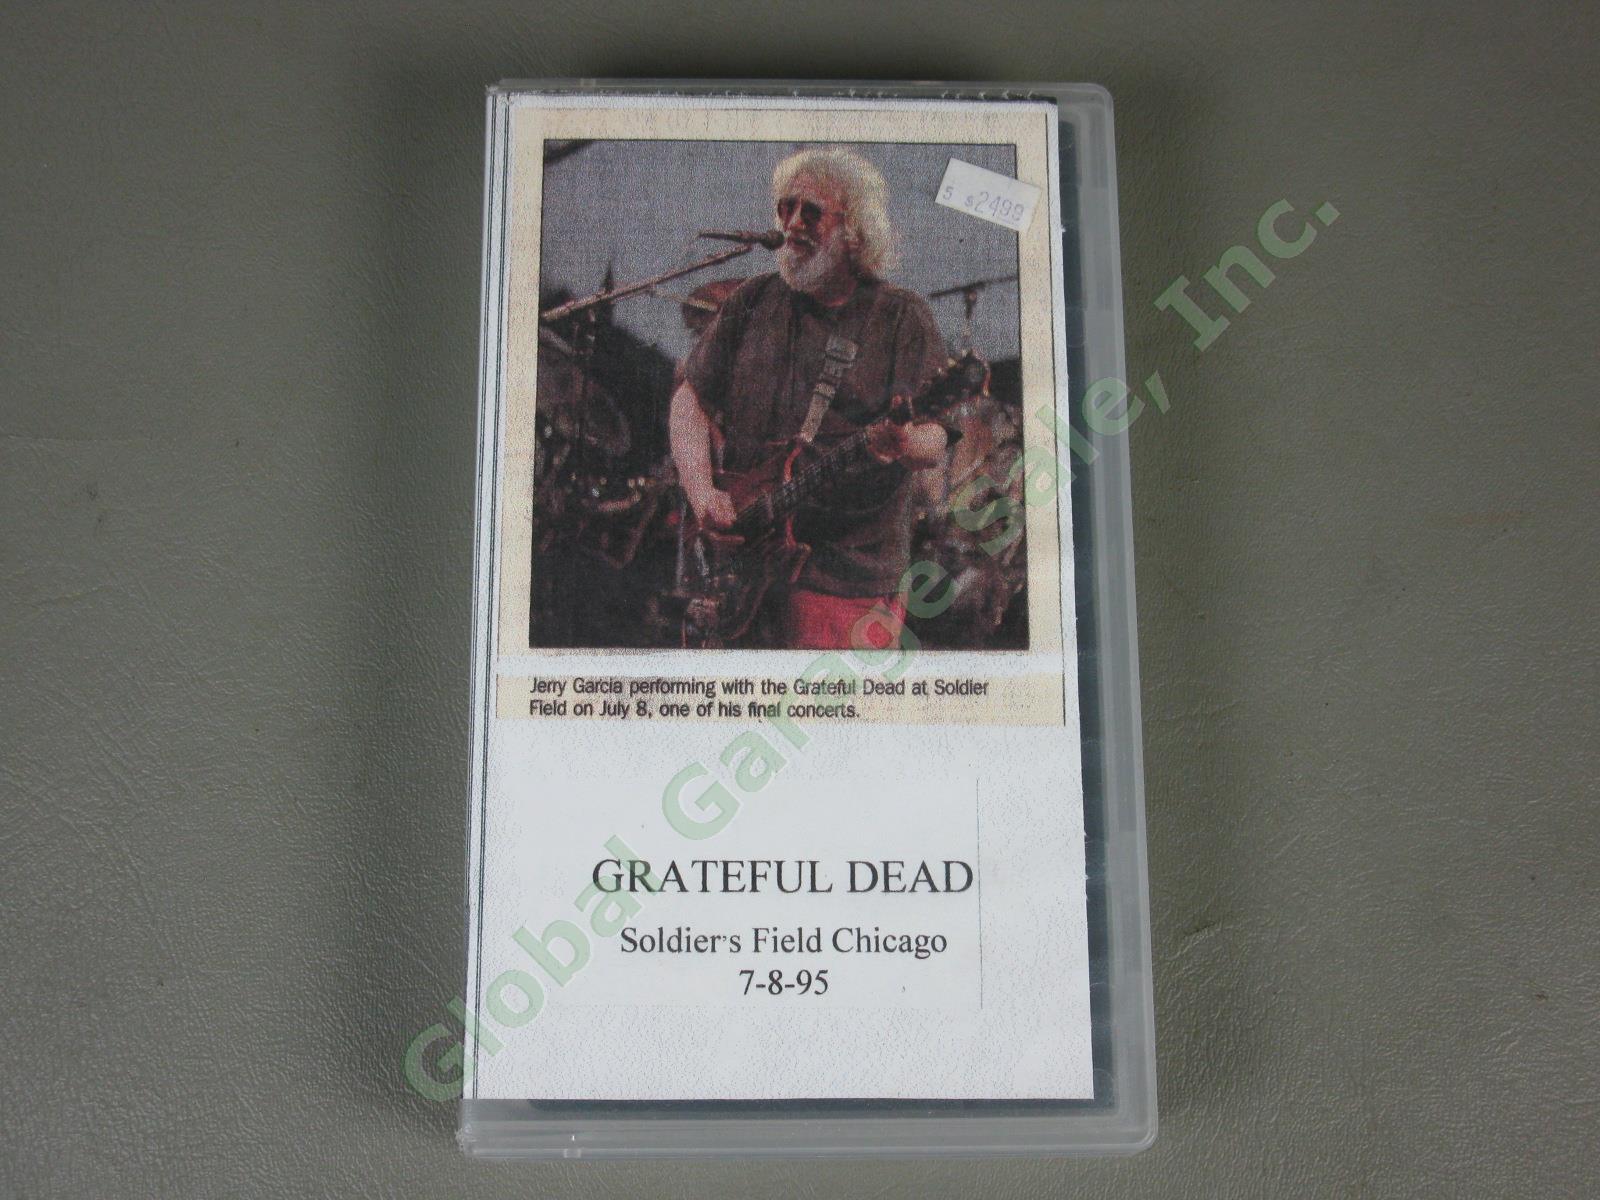 Vtg 1990s Grateful Dead Live Unreleased Show Concert Import CD VHS Lot 16 Discs 24